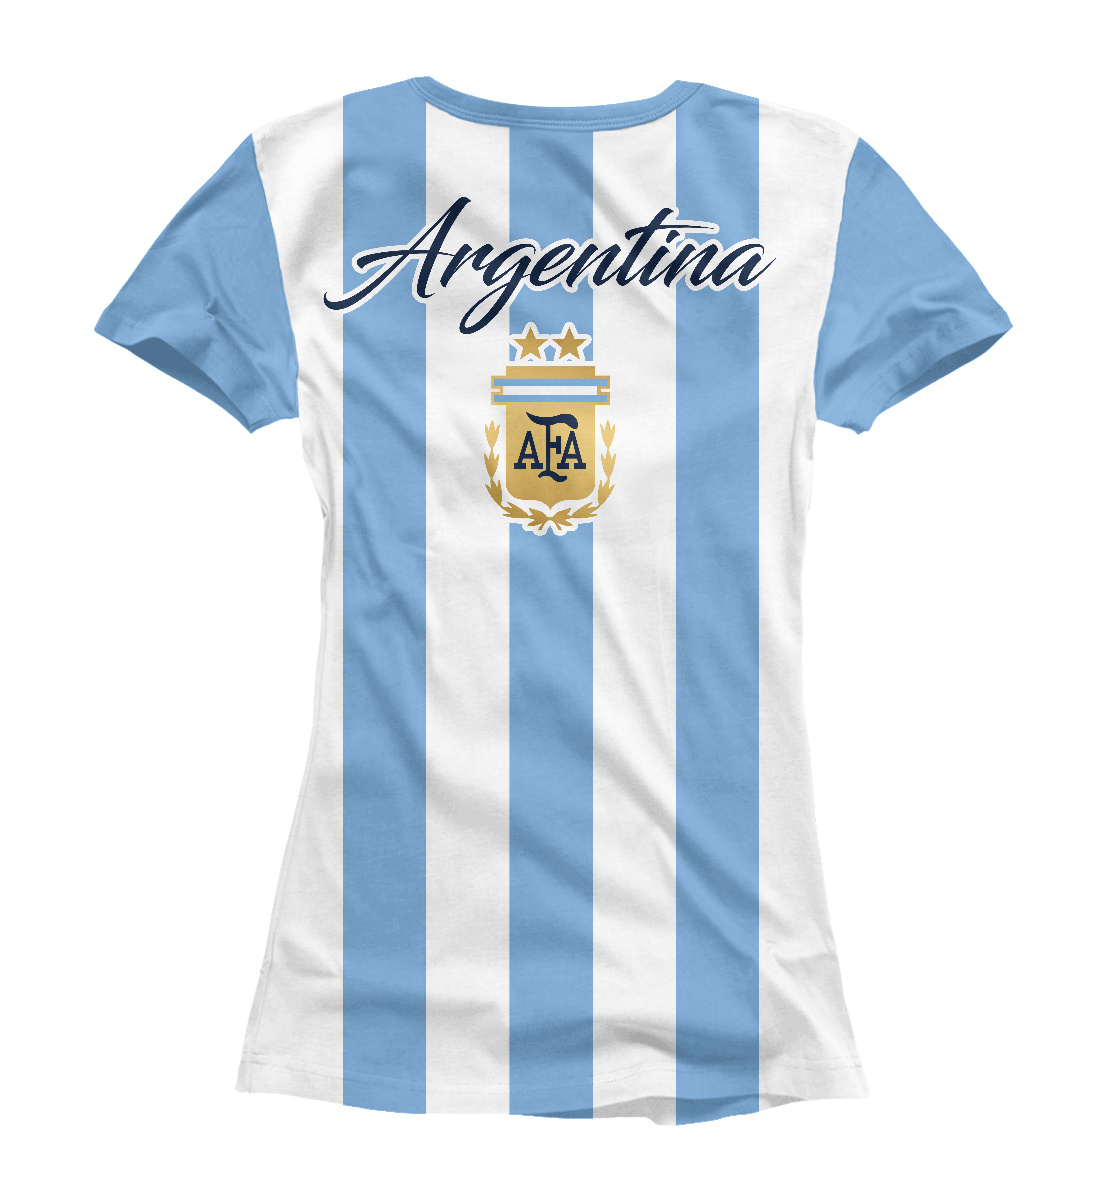 Детская Футболка Аргентина для девочек, артикул FNS-298687-fut-1mp - фото 2